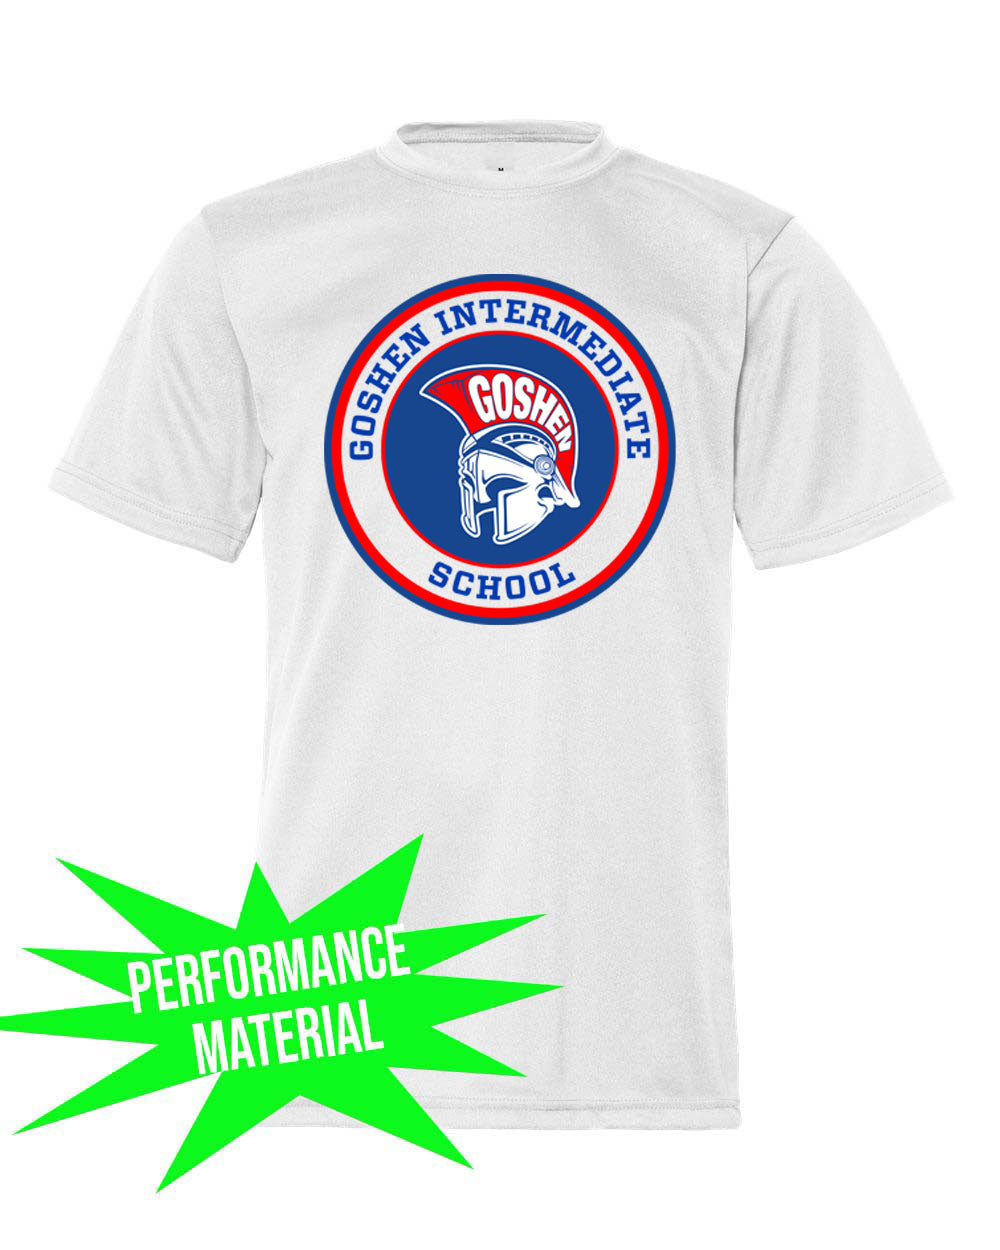 Goshen School Performance Material design 1 T-Shirt